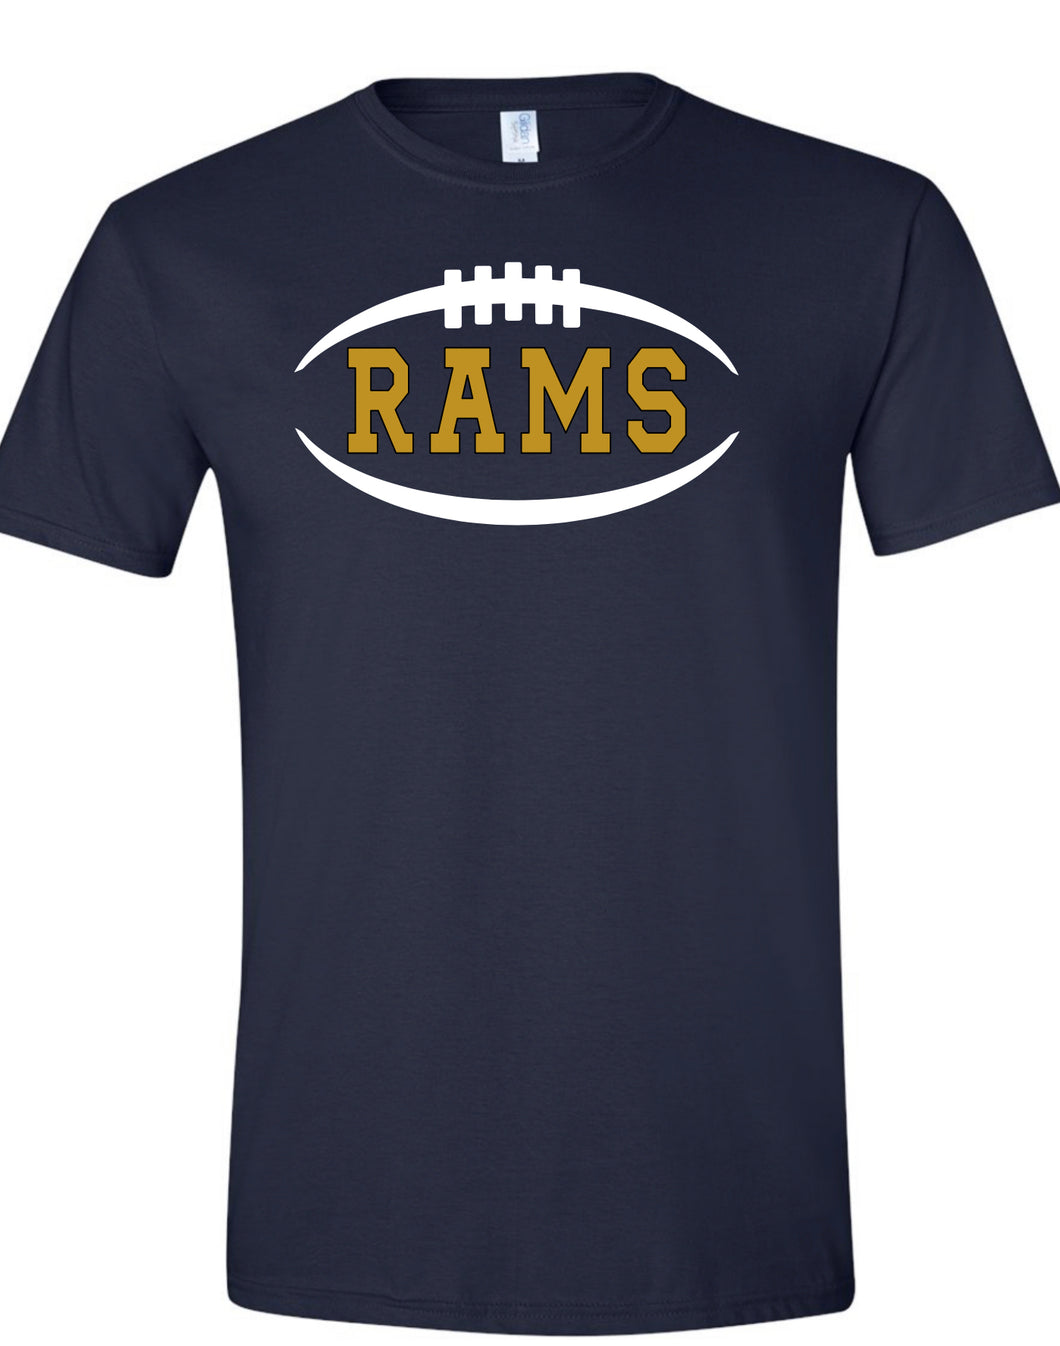 ADULT Rams Football T-shirt